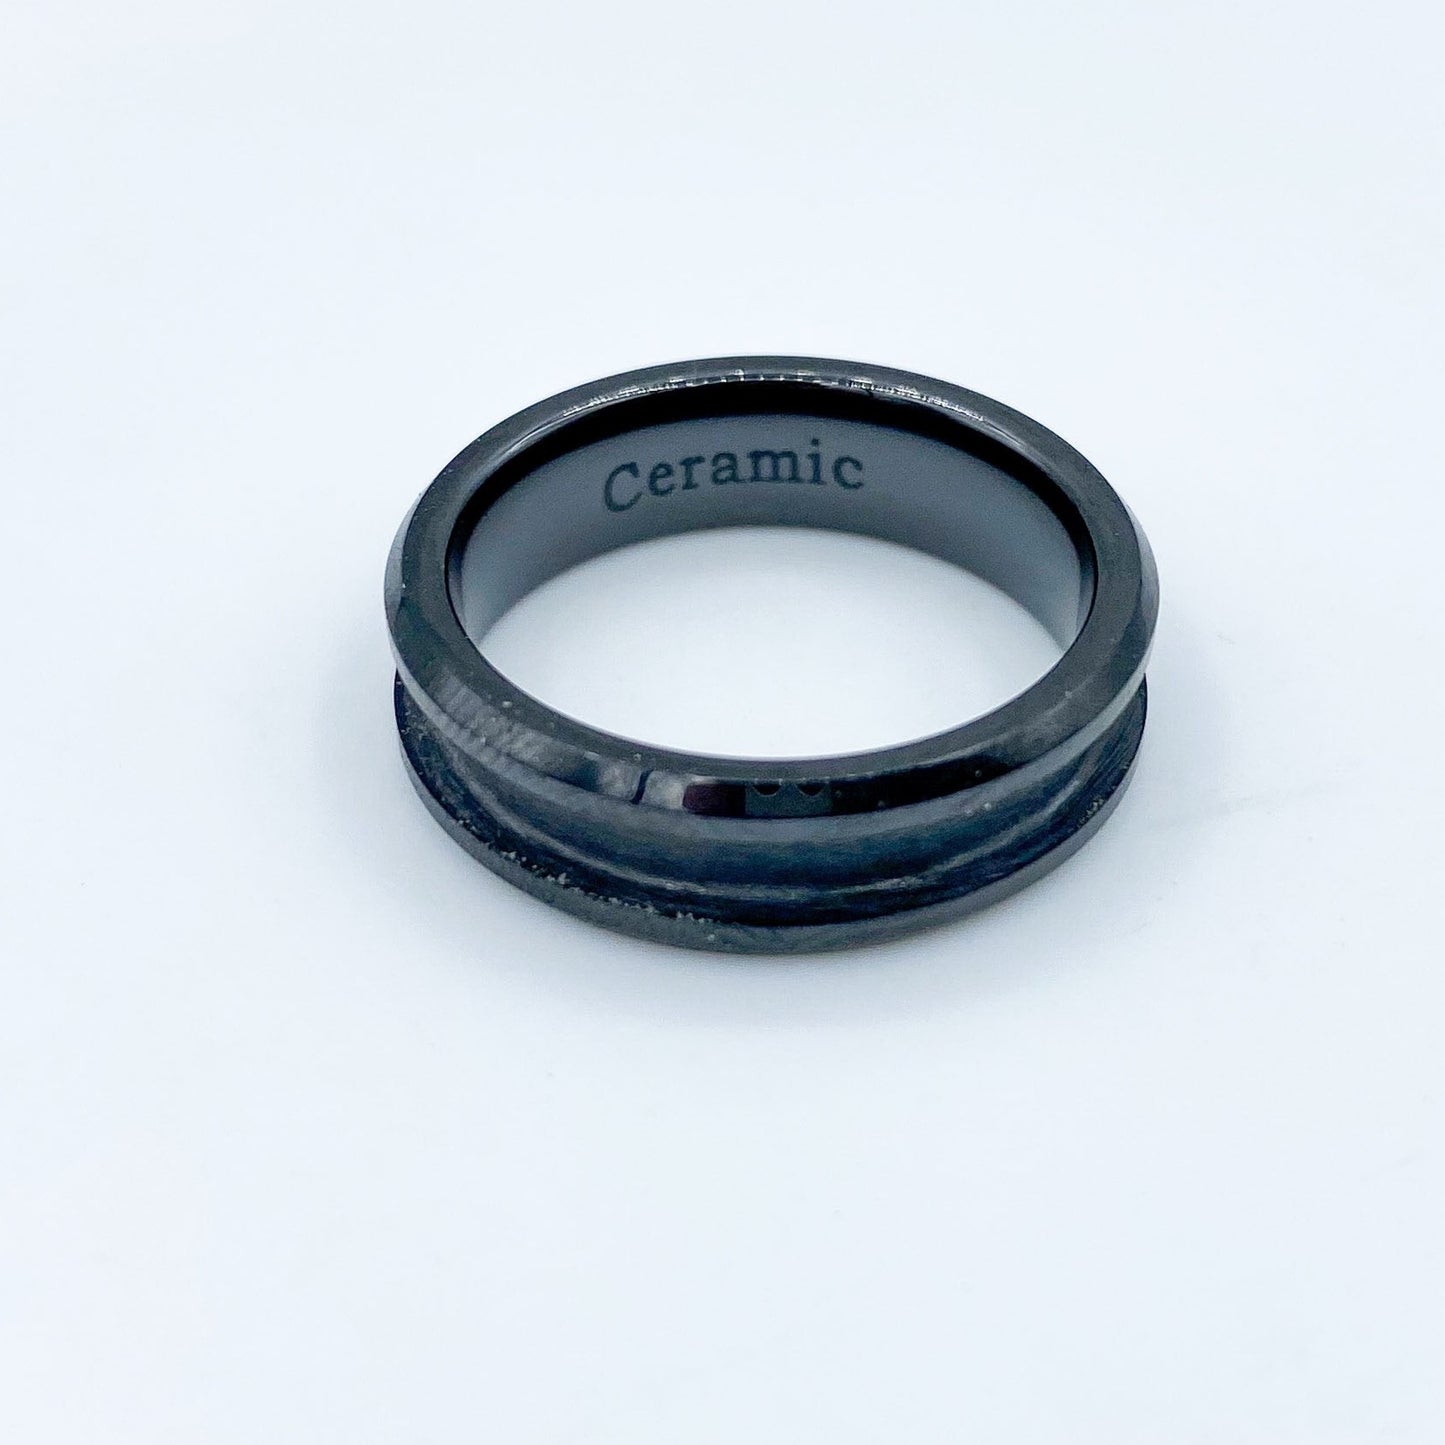 10 Pack - Black Ceramic Ring Blank - Patrick Adair Supplies